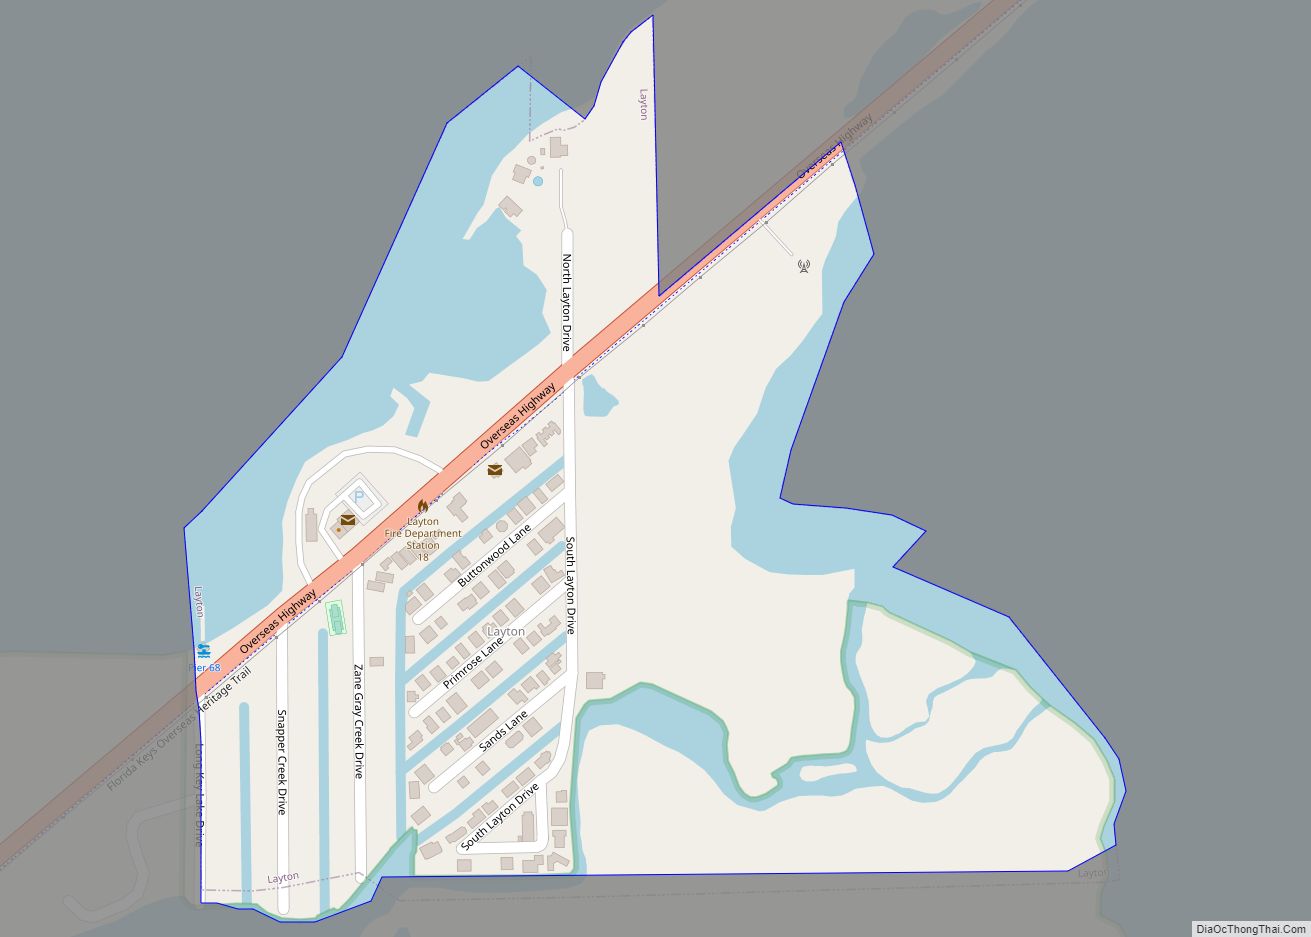 Map of Layton city